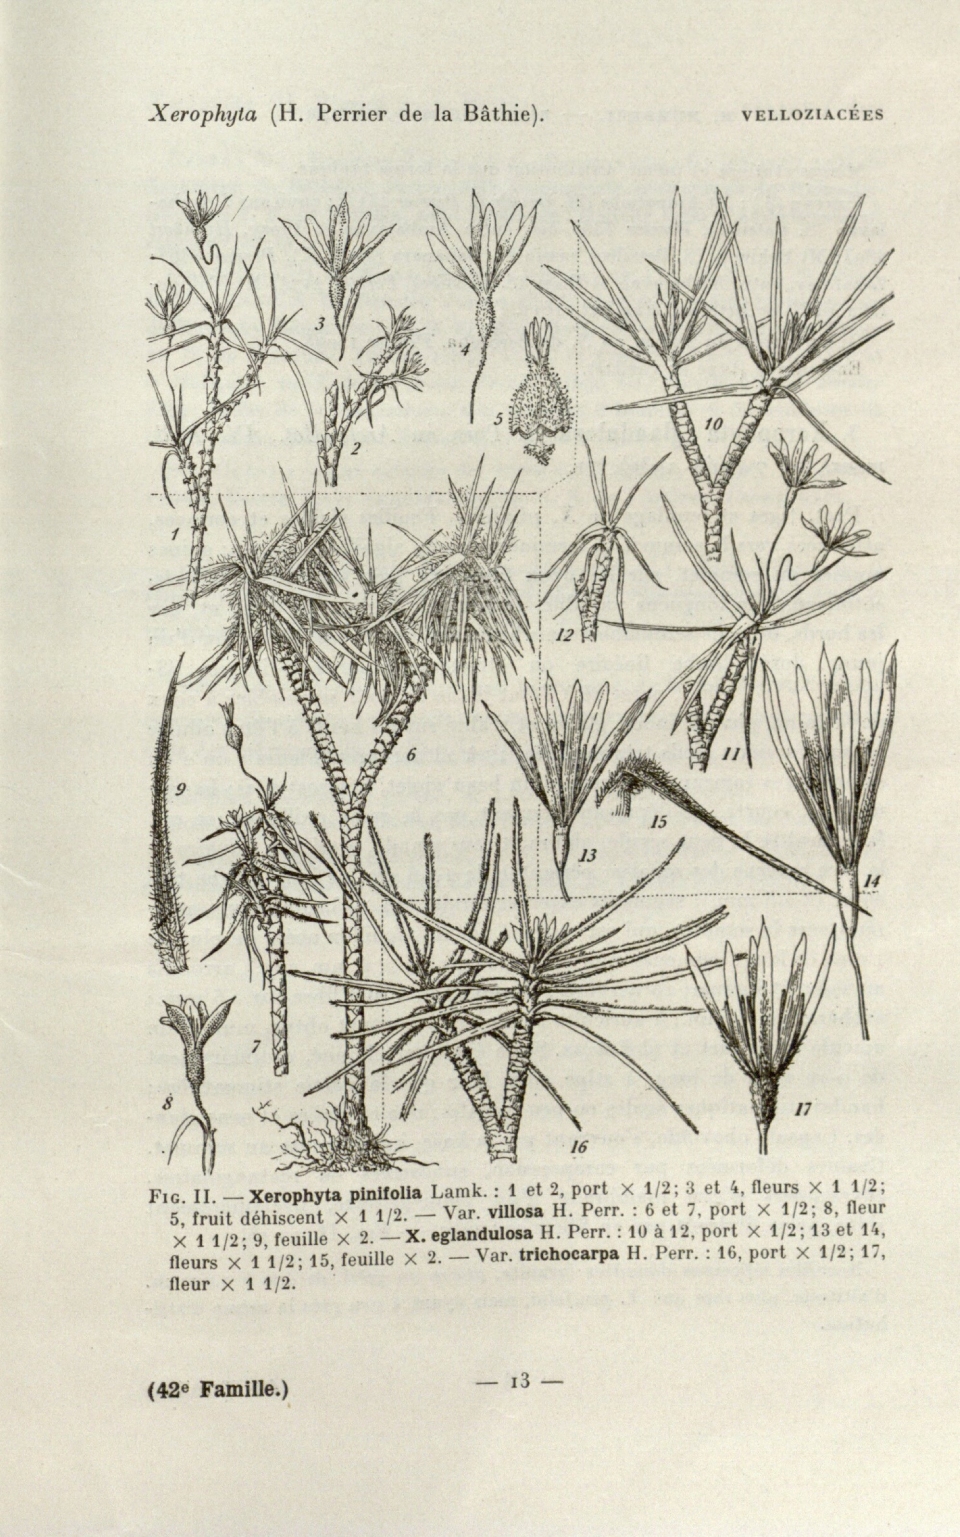 Xerophyta pinifolia